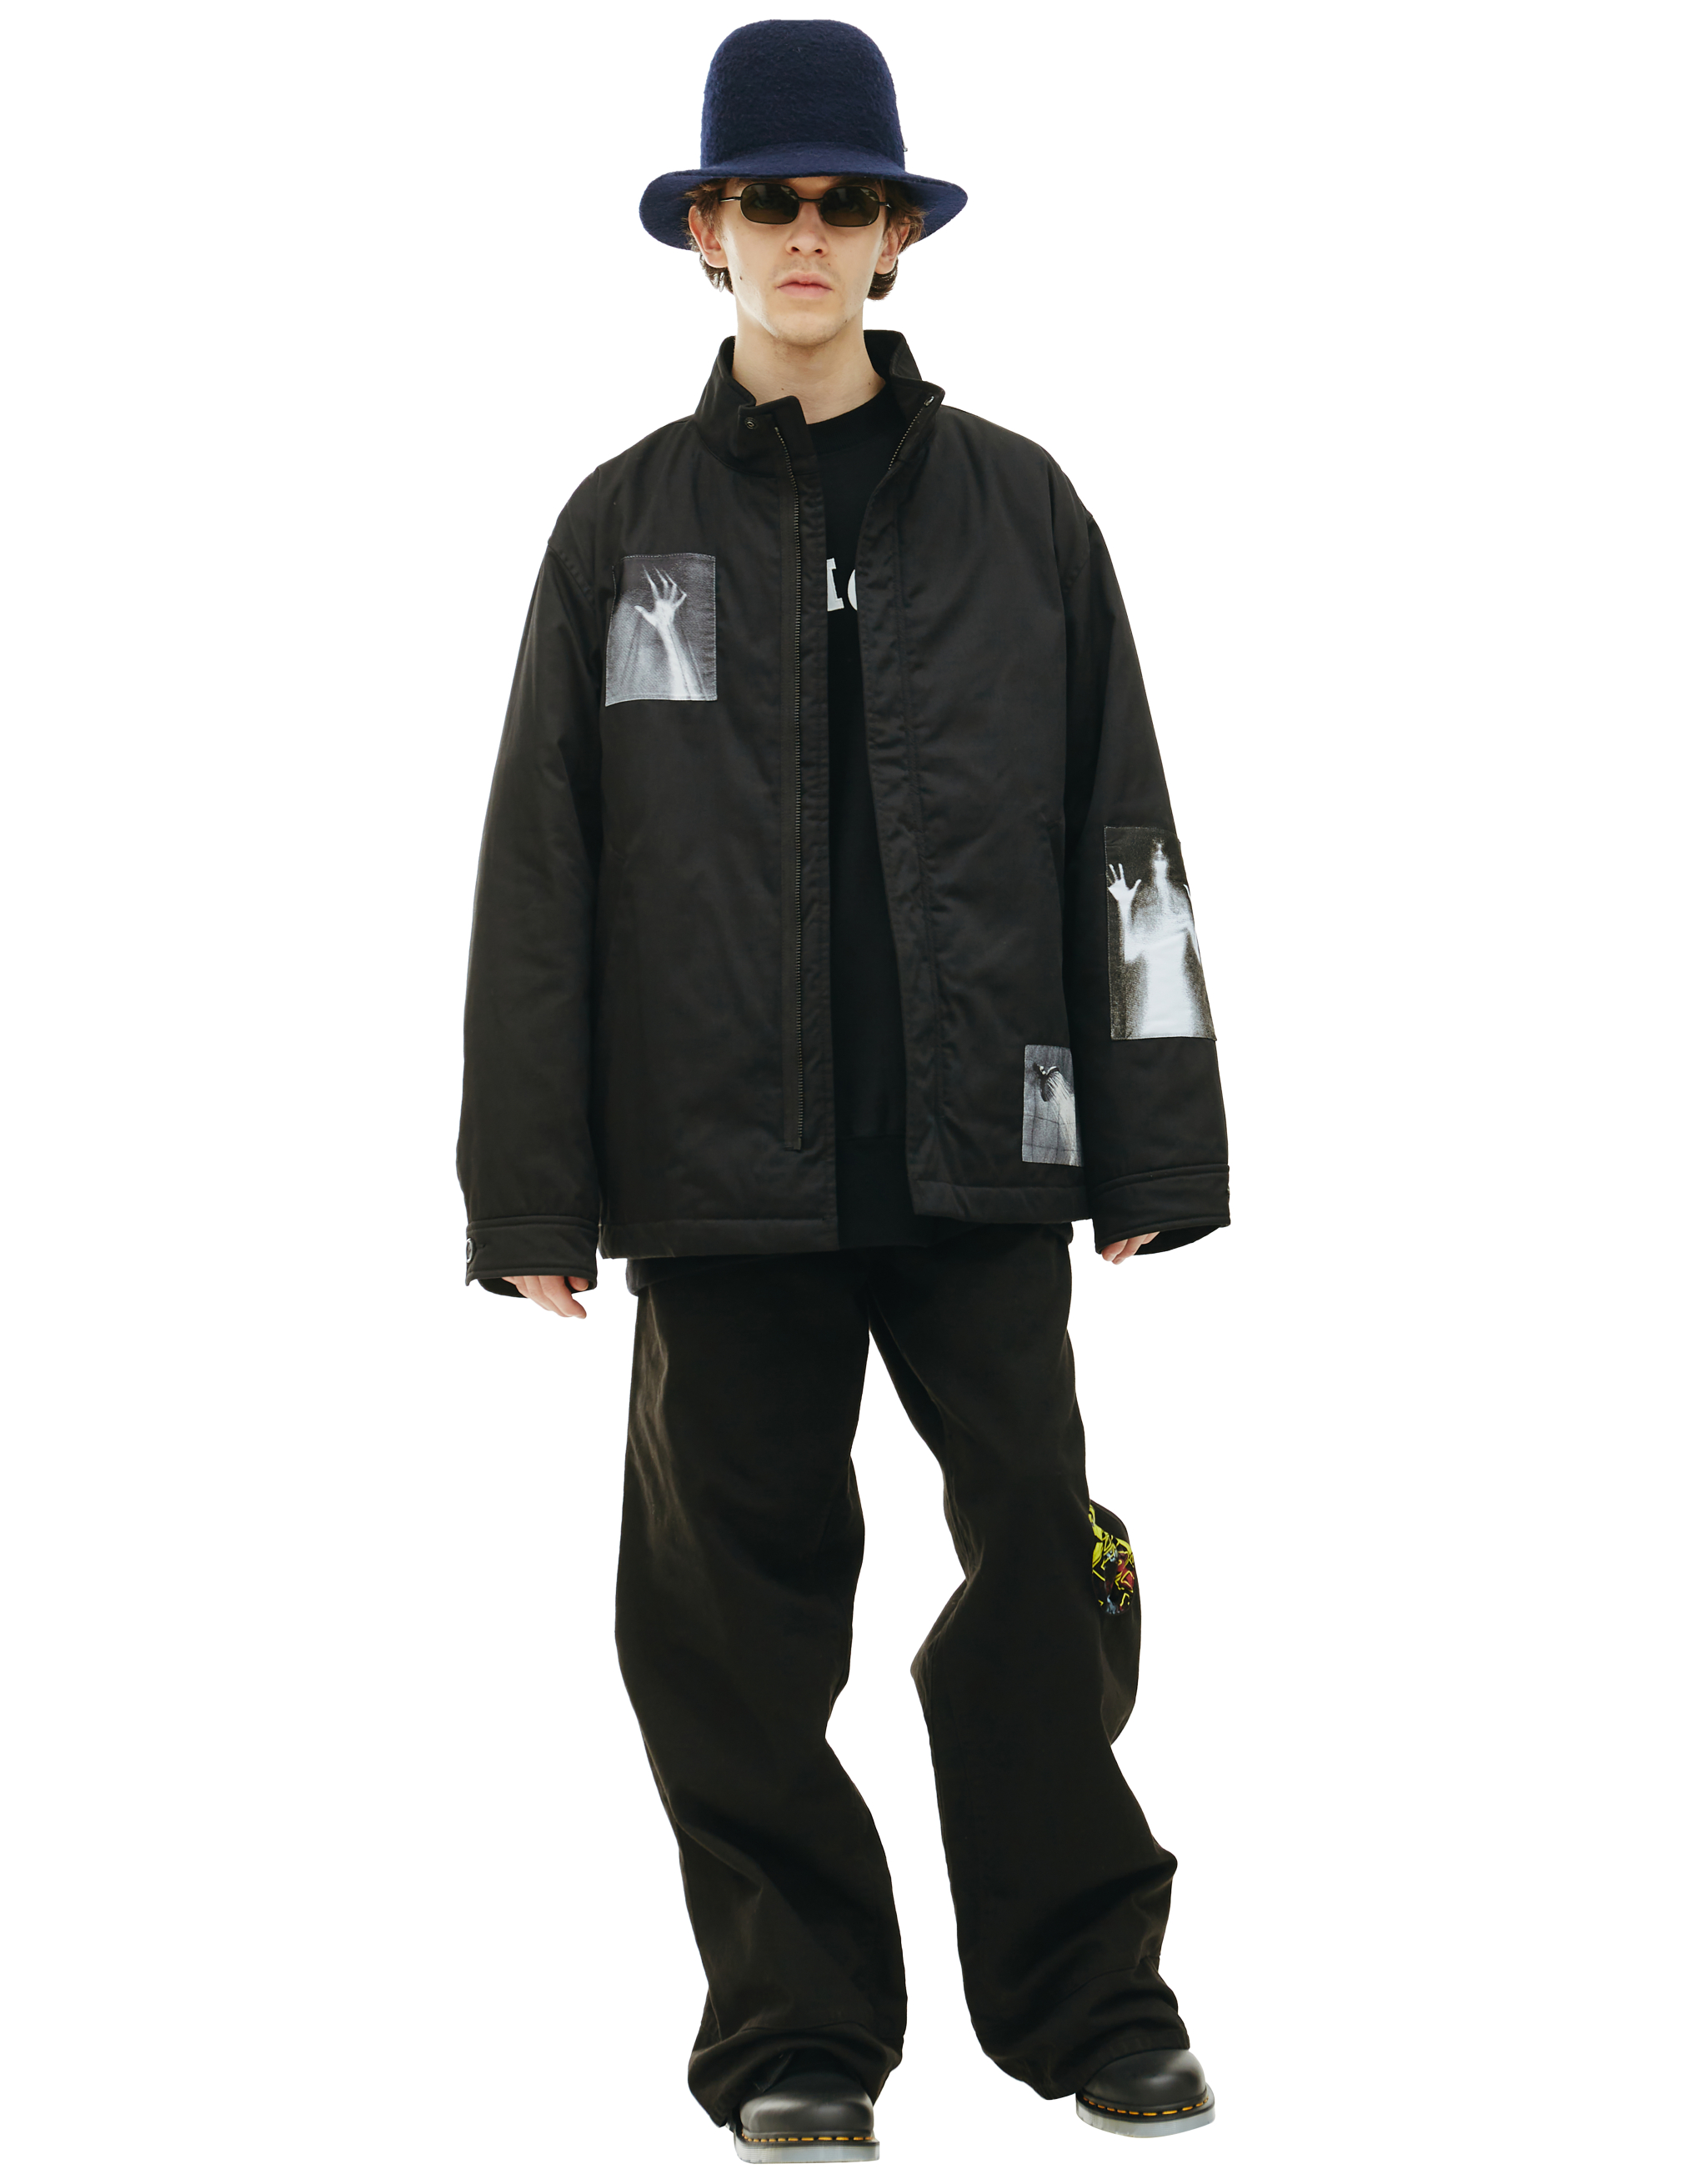 Куртка Psycho с патчами Undercover UC2B4202/1, размер 5;4